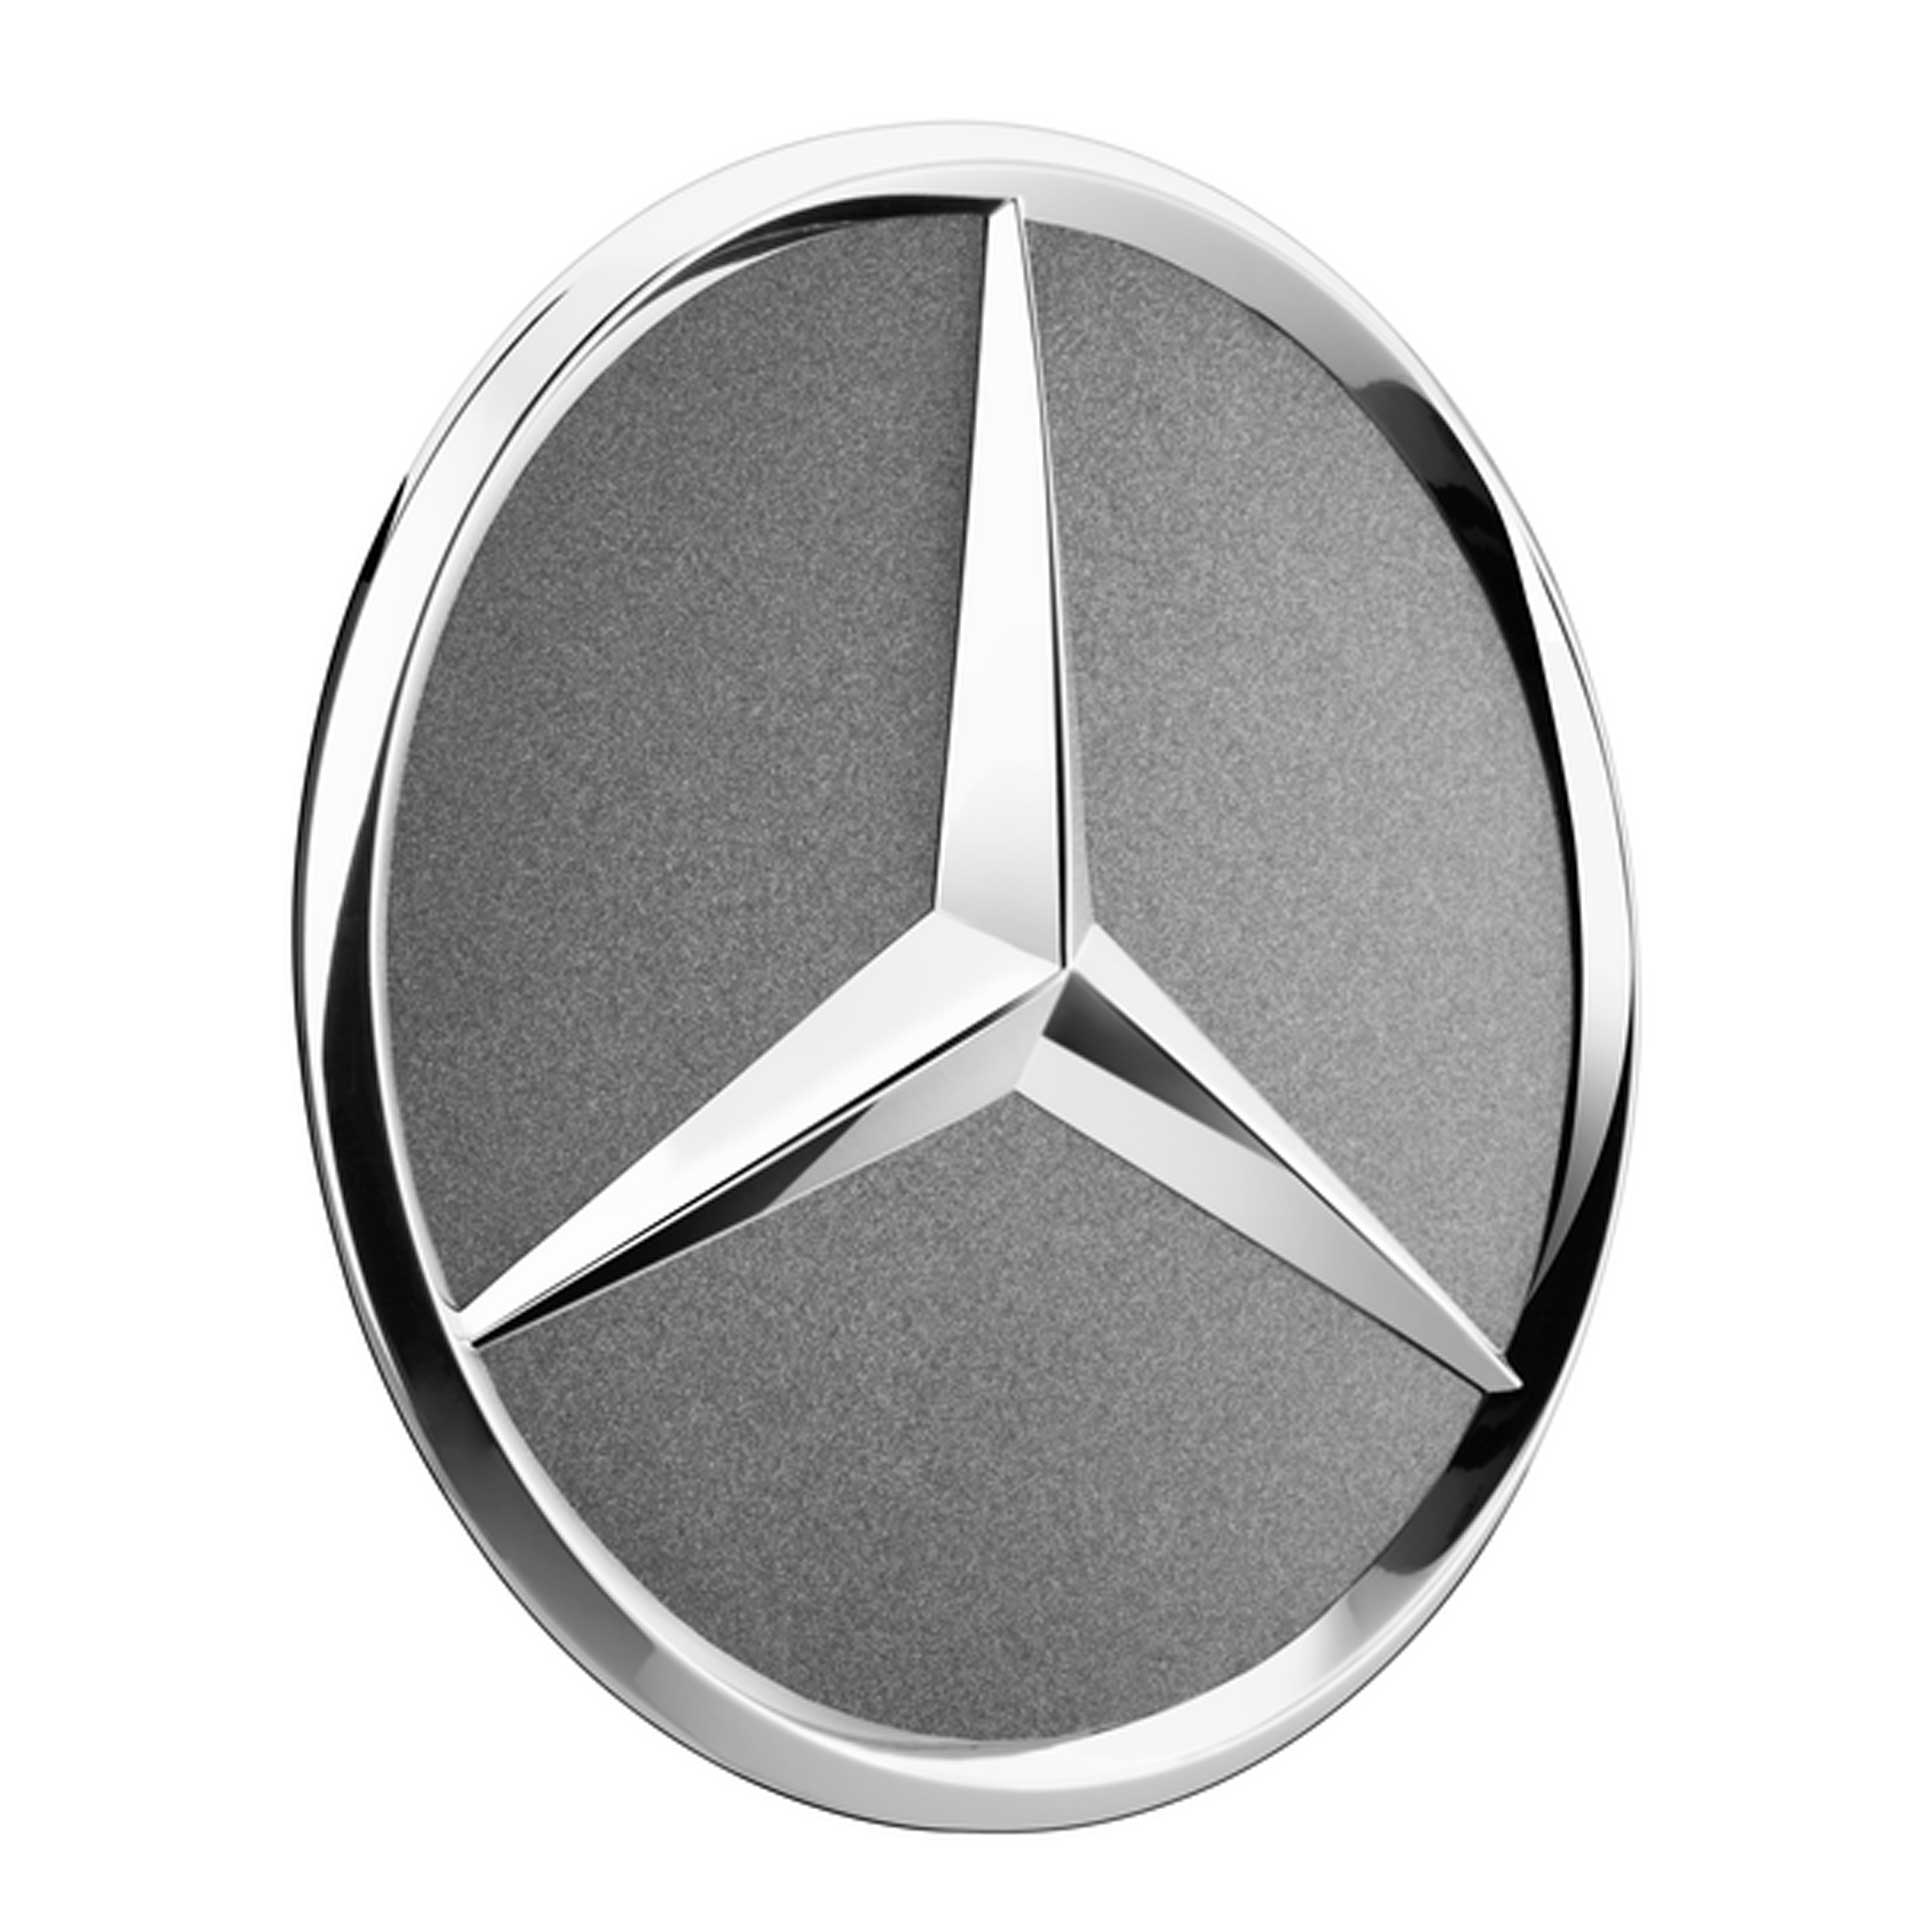 Mercedes-Benz Radnabenabdeckung Stern Himalayagrau matt